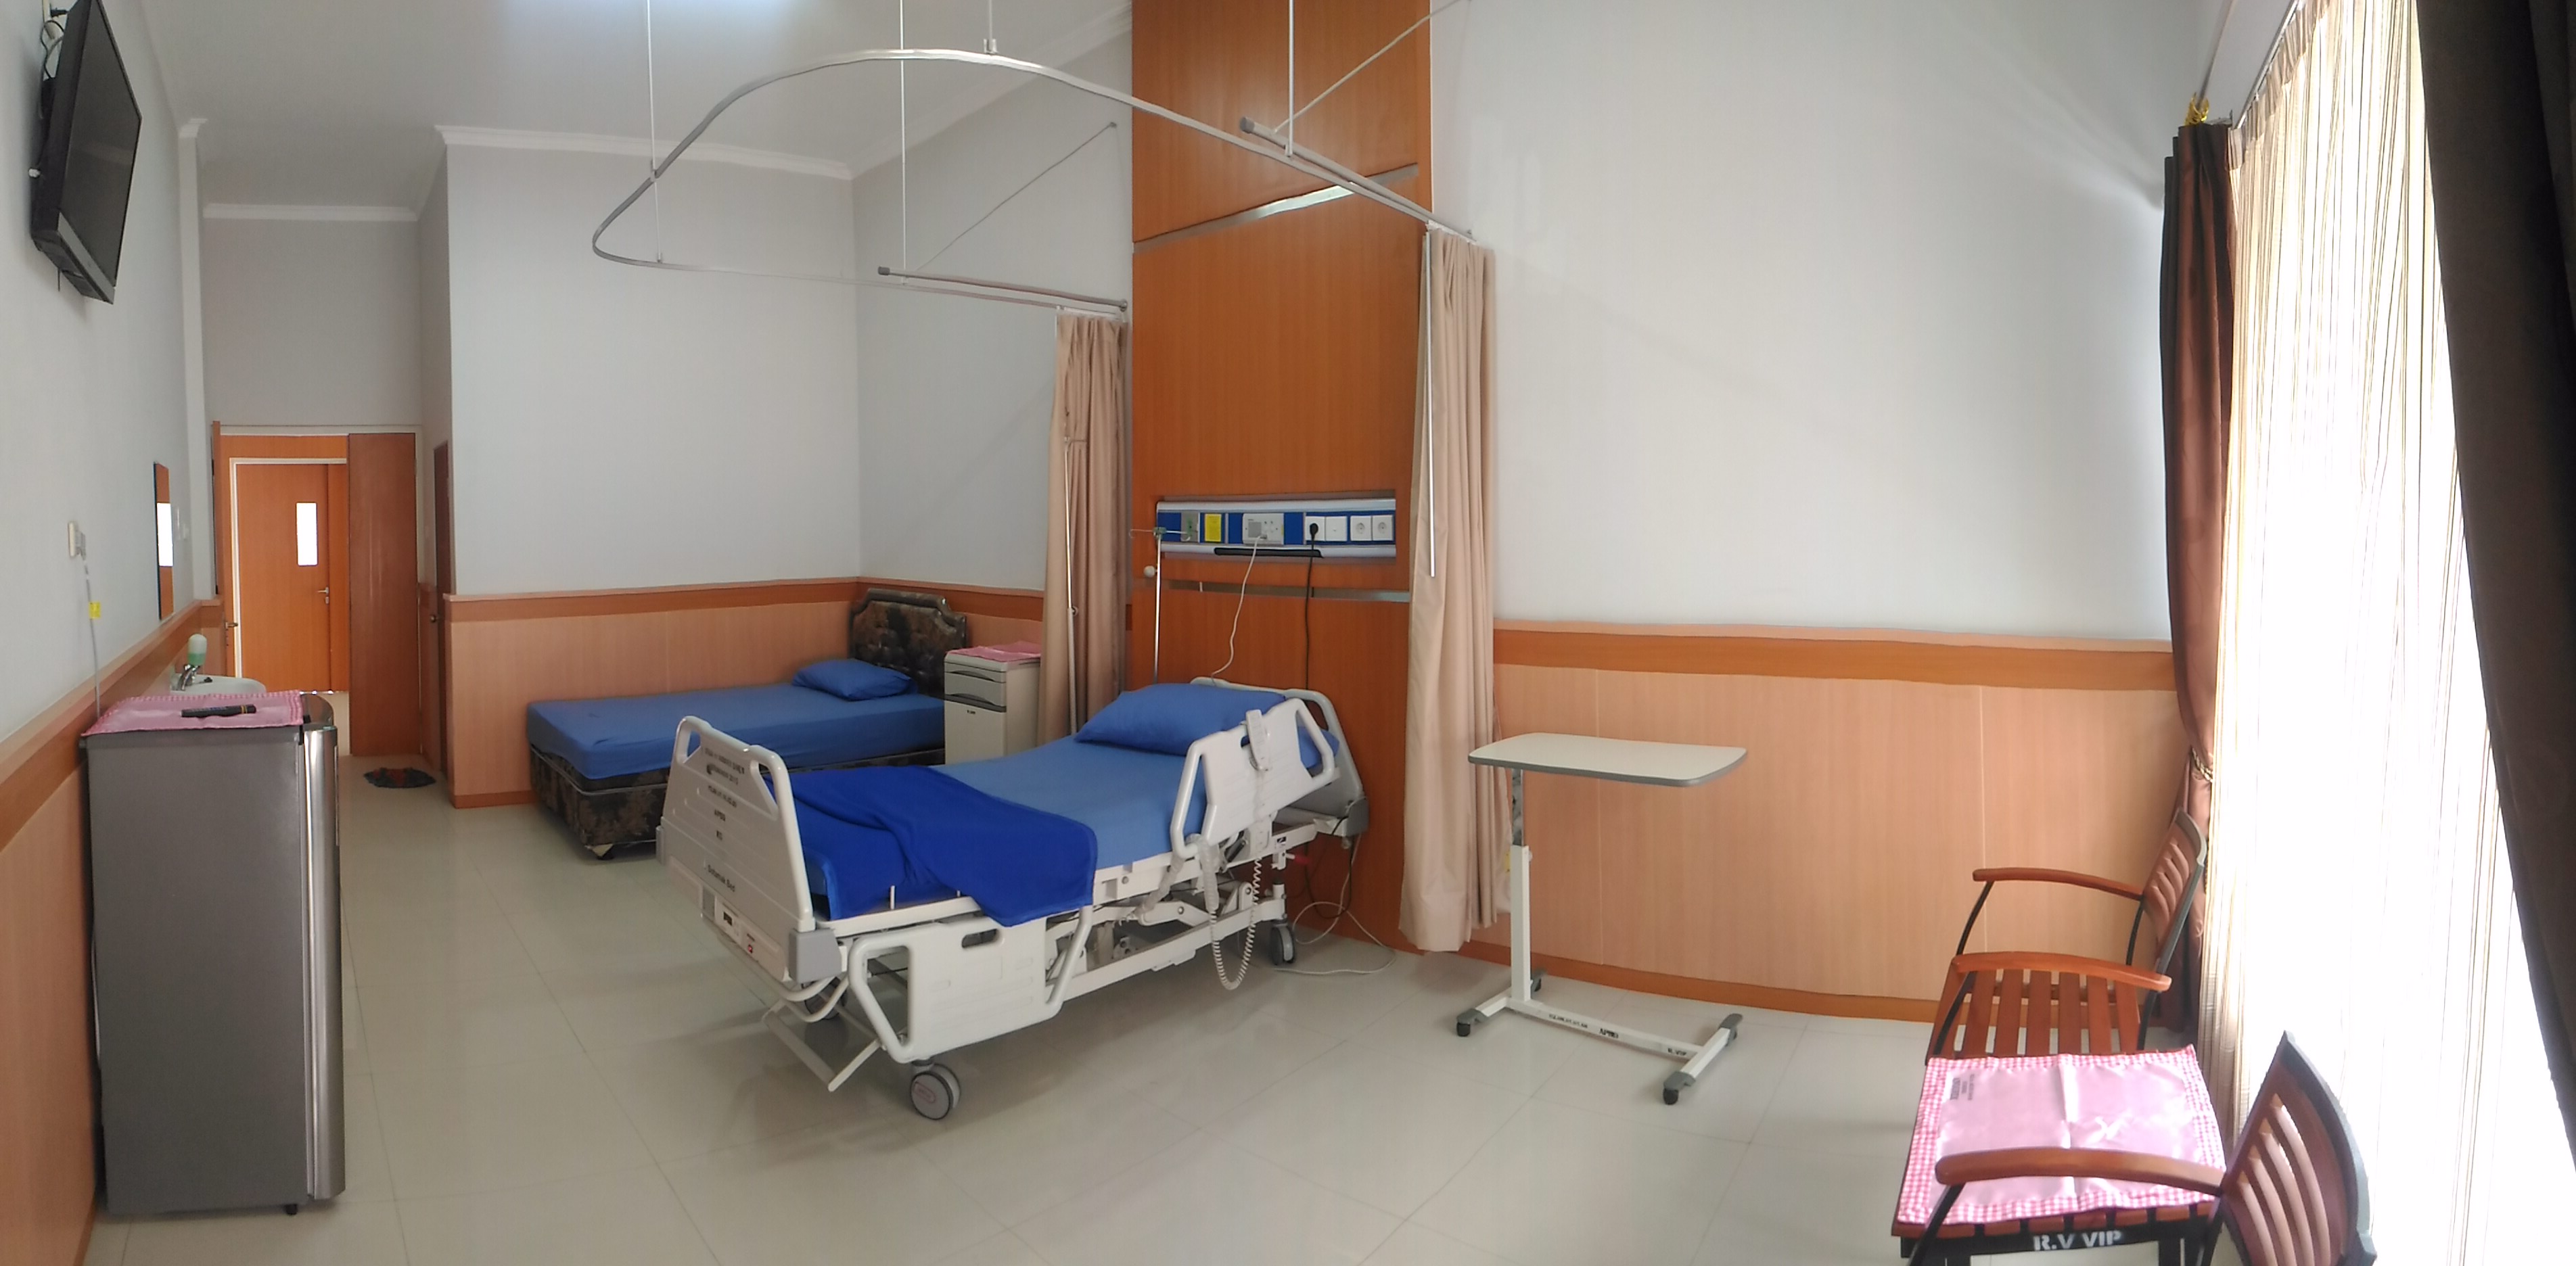 Rumah Sakit Umum Daerah Dr Abdoer Rahem Ruang Anggrek Vvip